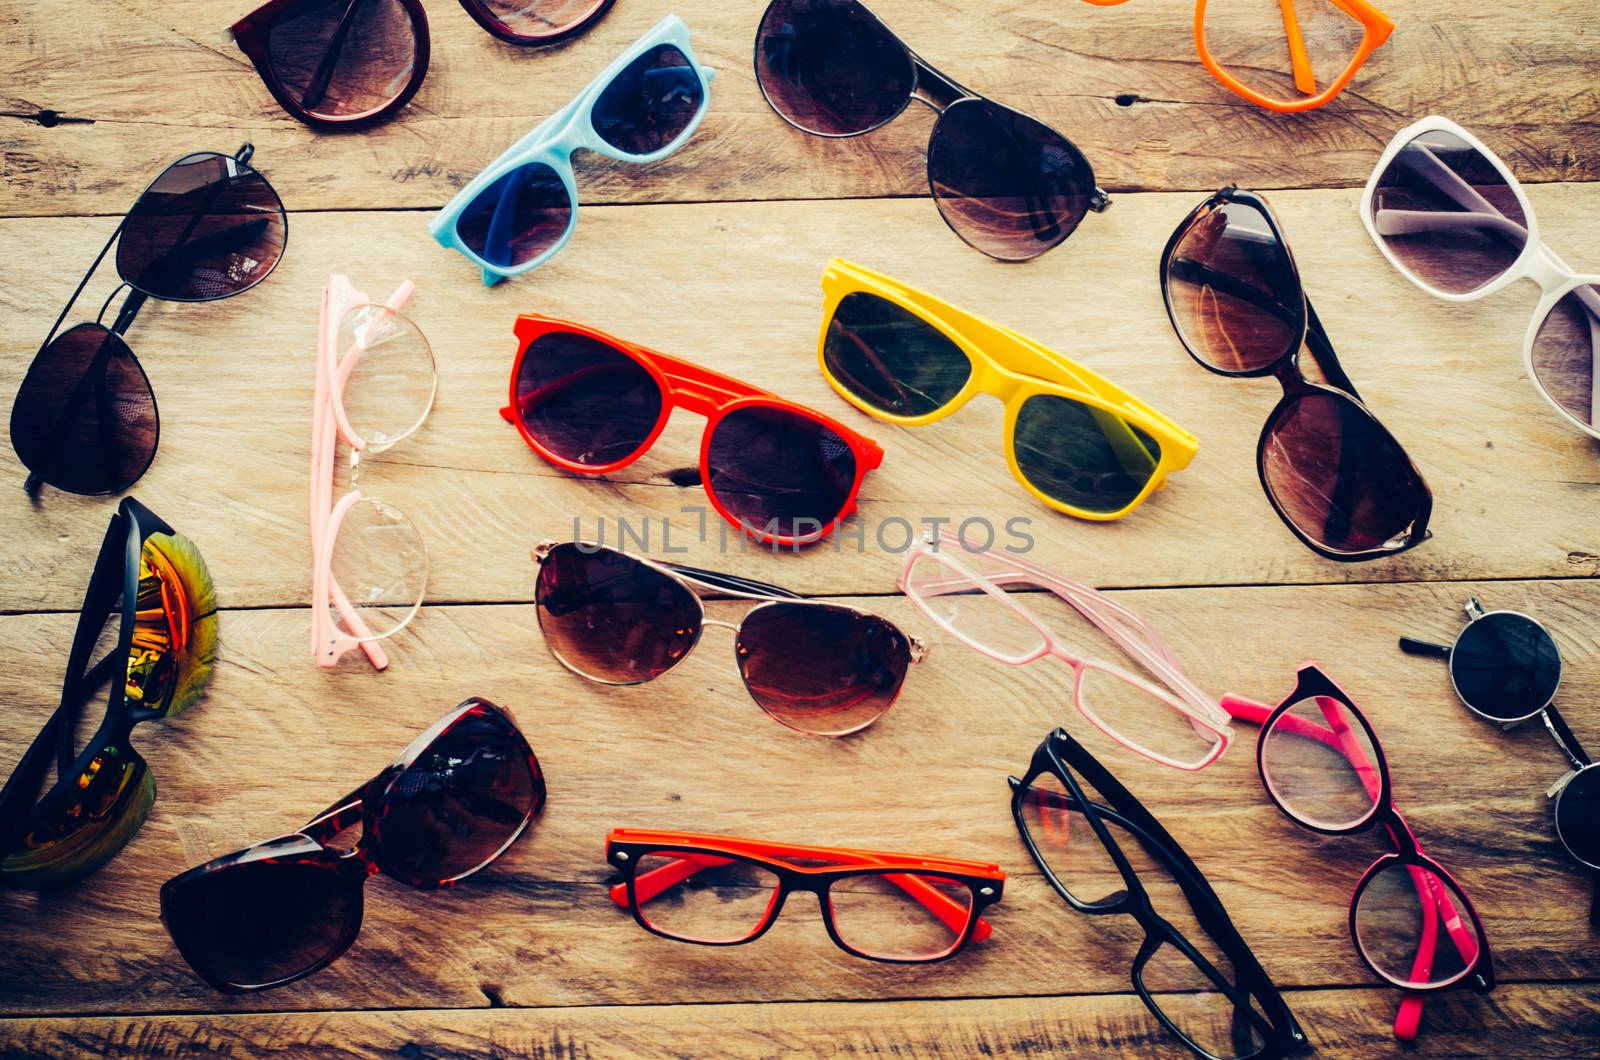 Many sunglasses fashion and eyeglasses on the wood